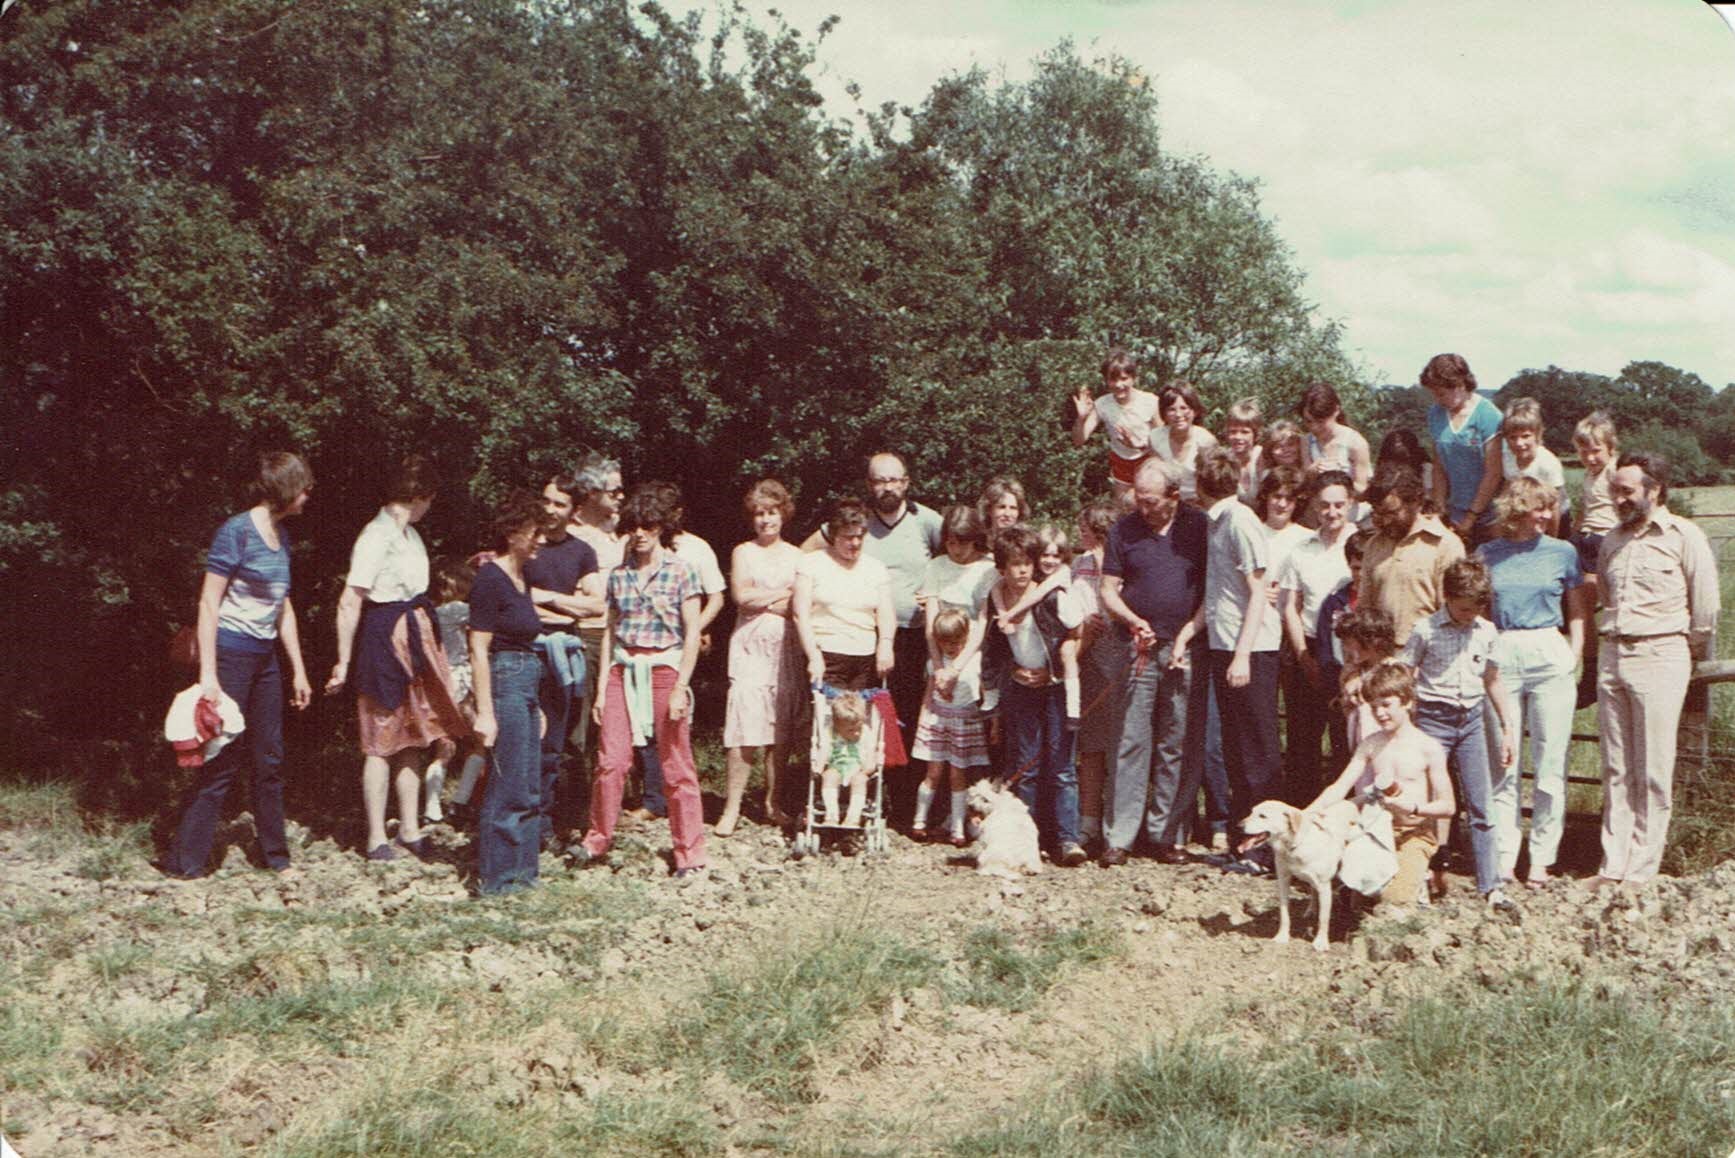 Parish Boundary Walk 1988 - Does anybody recognise themselves?